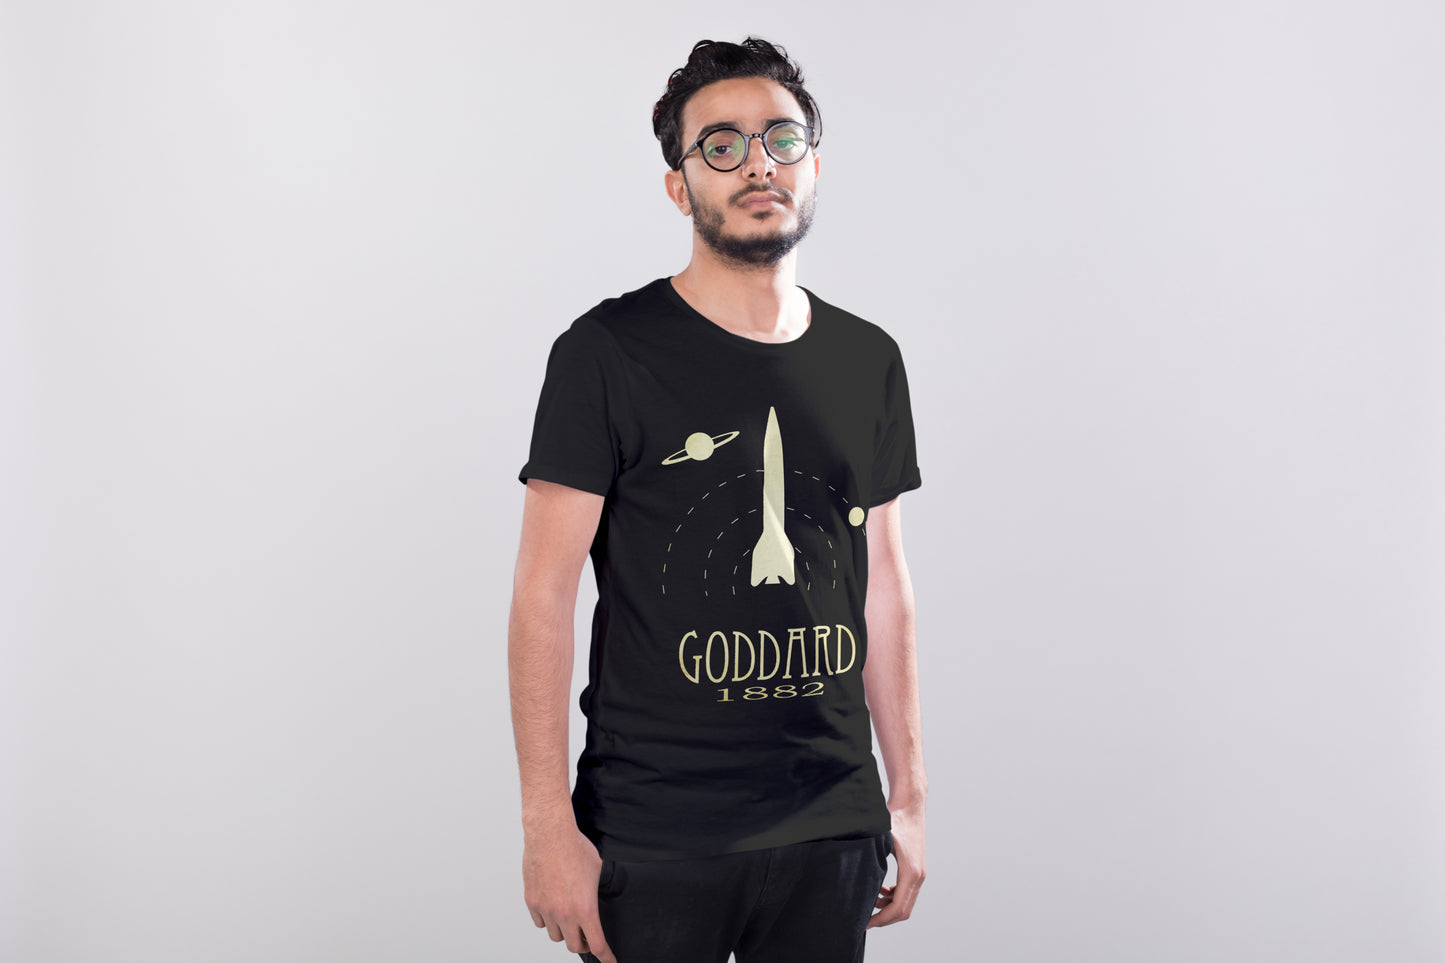 Goddard Rocket Scientist T-shirt, Robert Goddard Engineering and Physics Graphic Tee